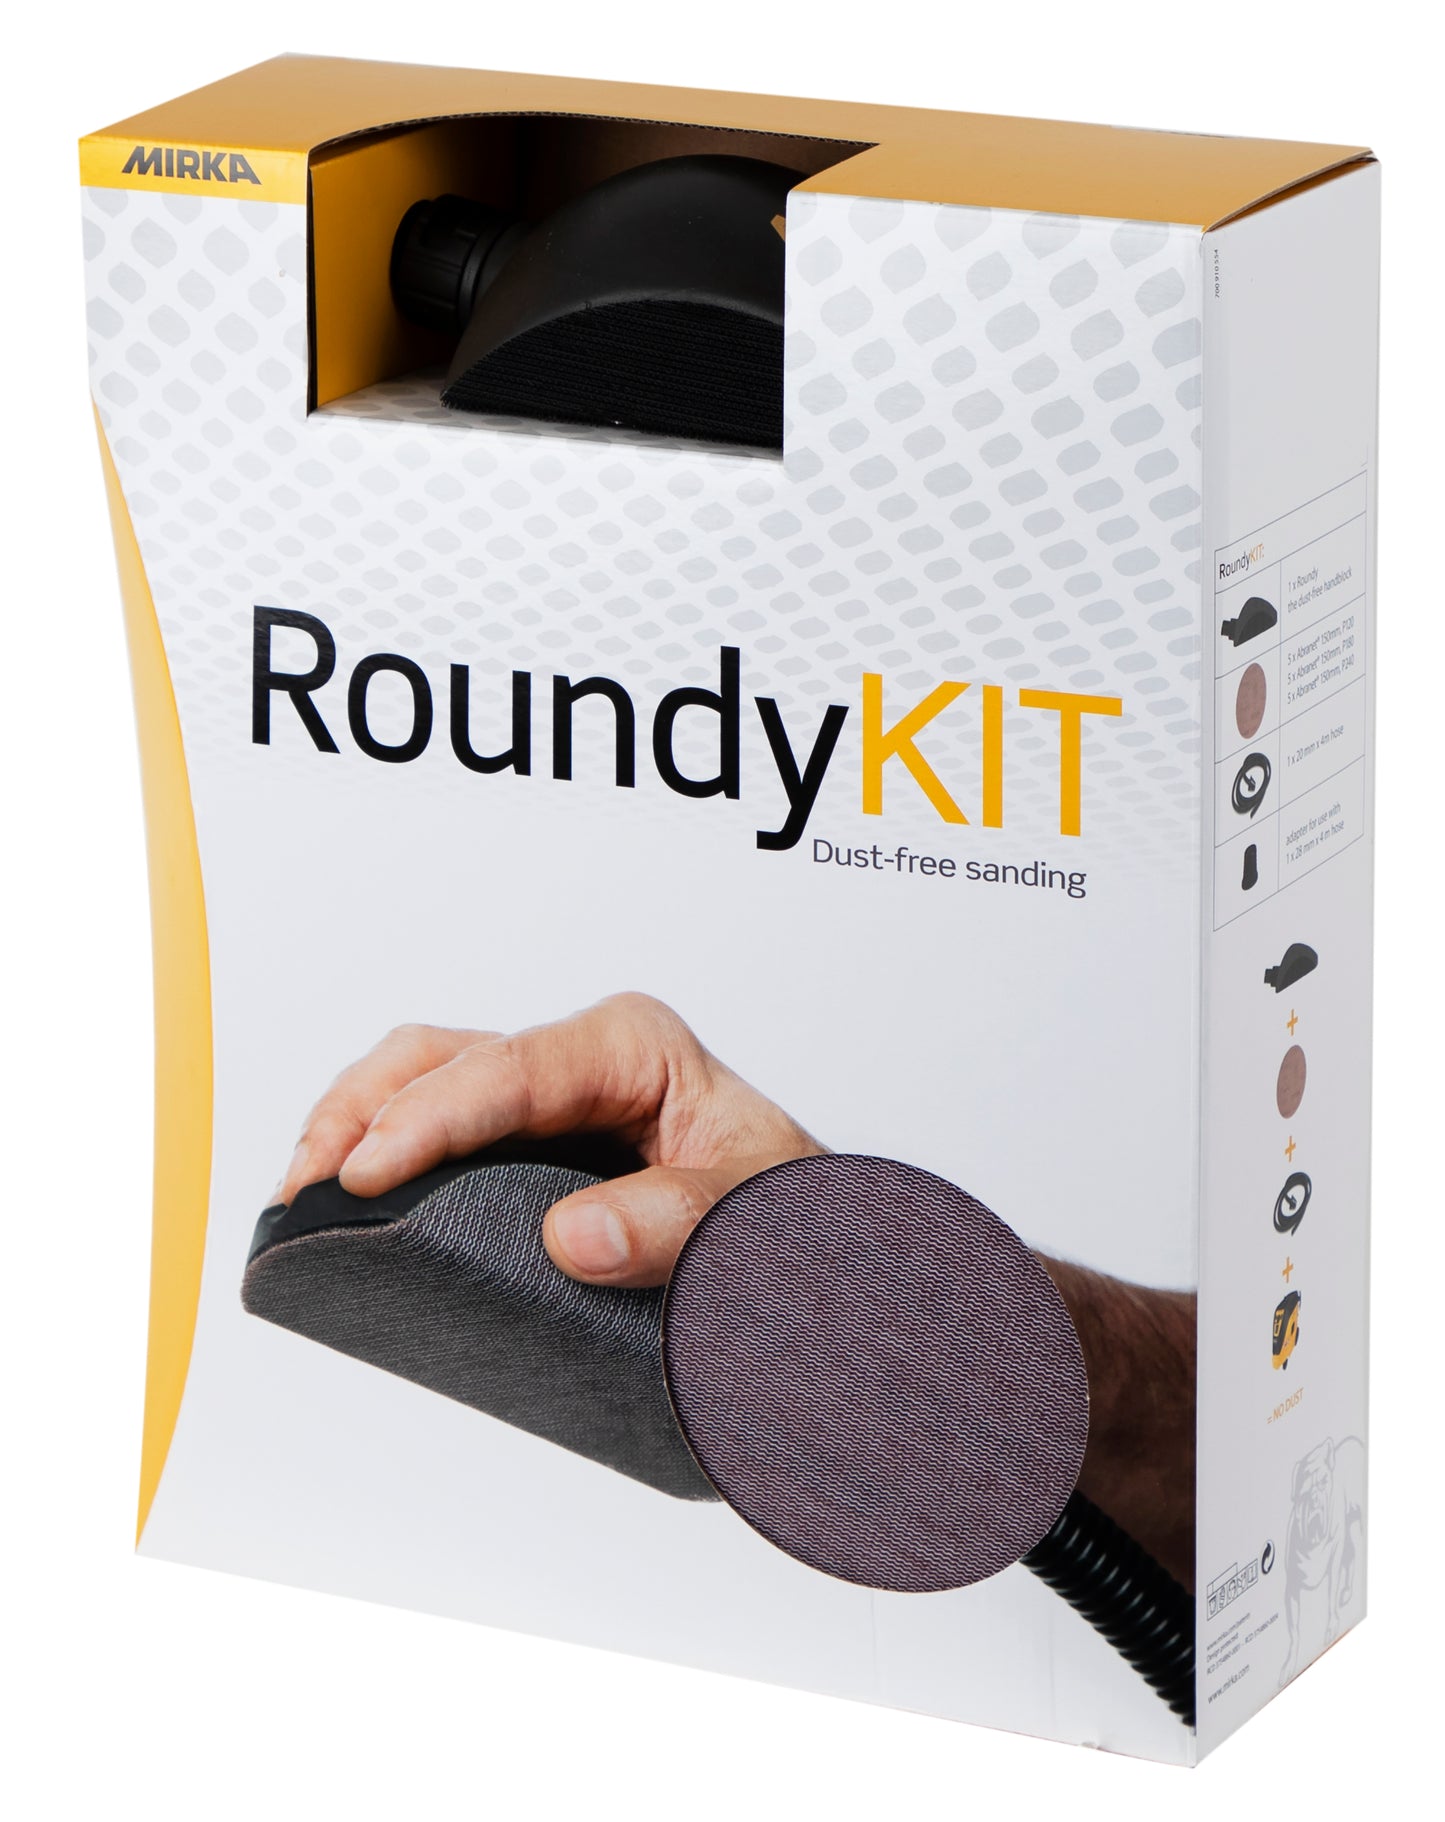 MIRKA Roundy Kit